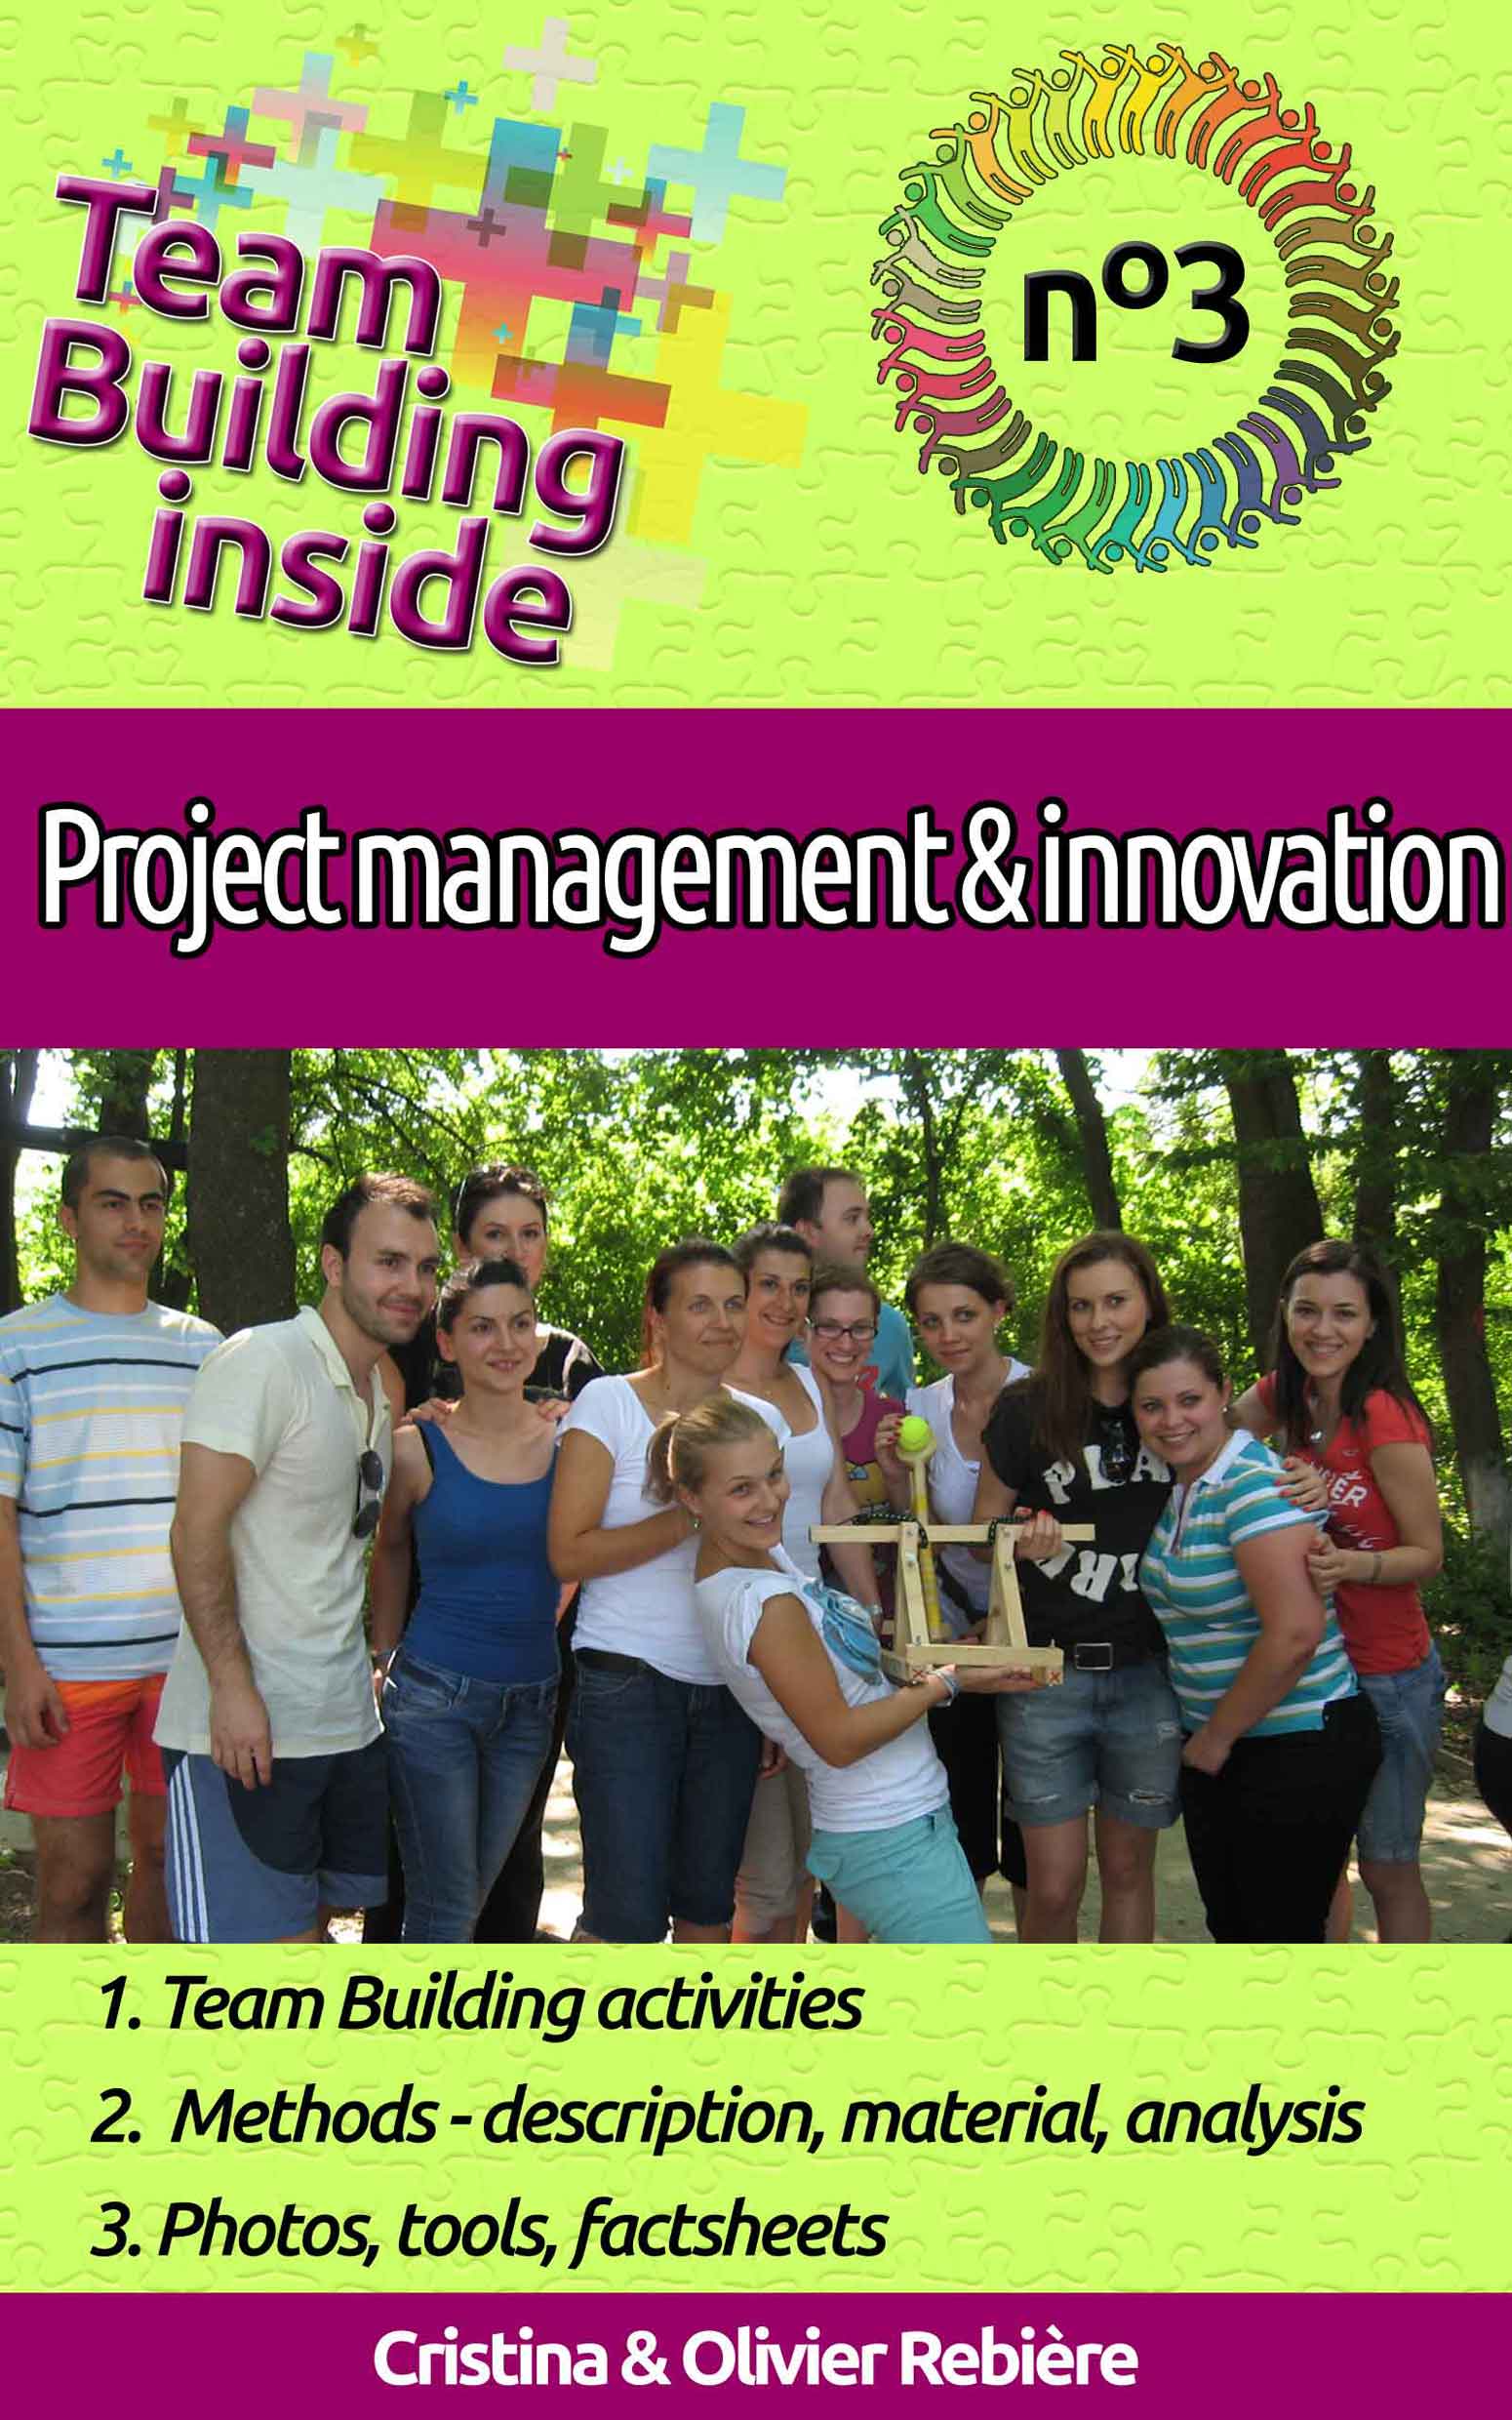 Team Building inside #3 - project management & innovation - Cristina Rebiere & Olivier Rebiere